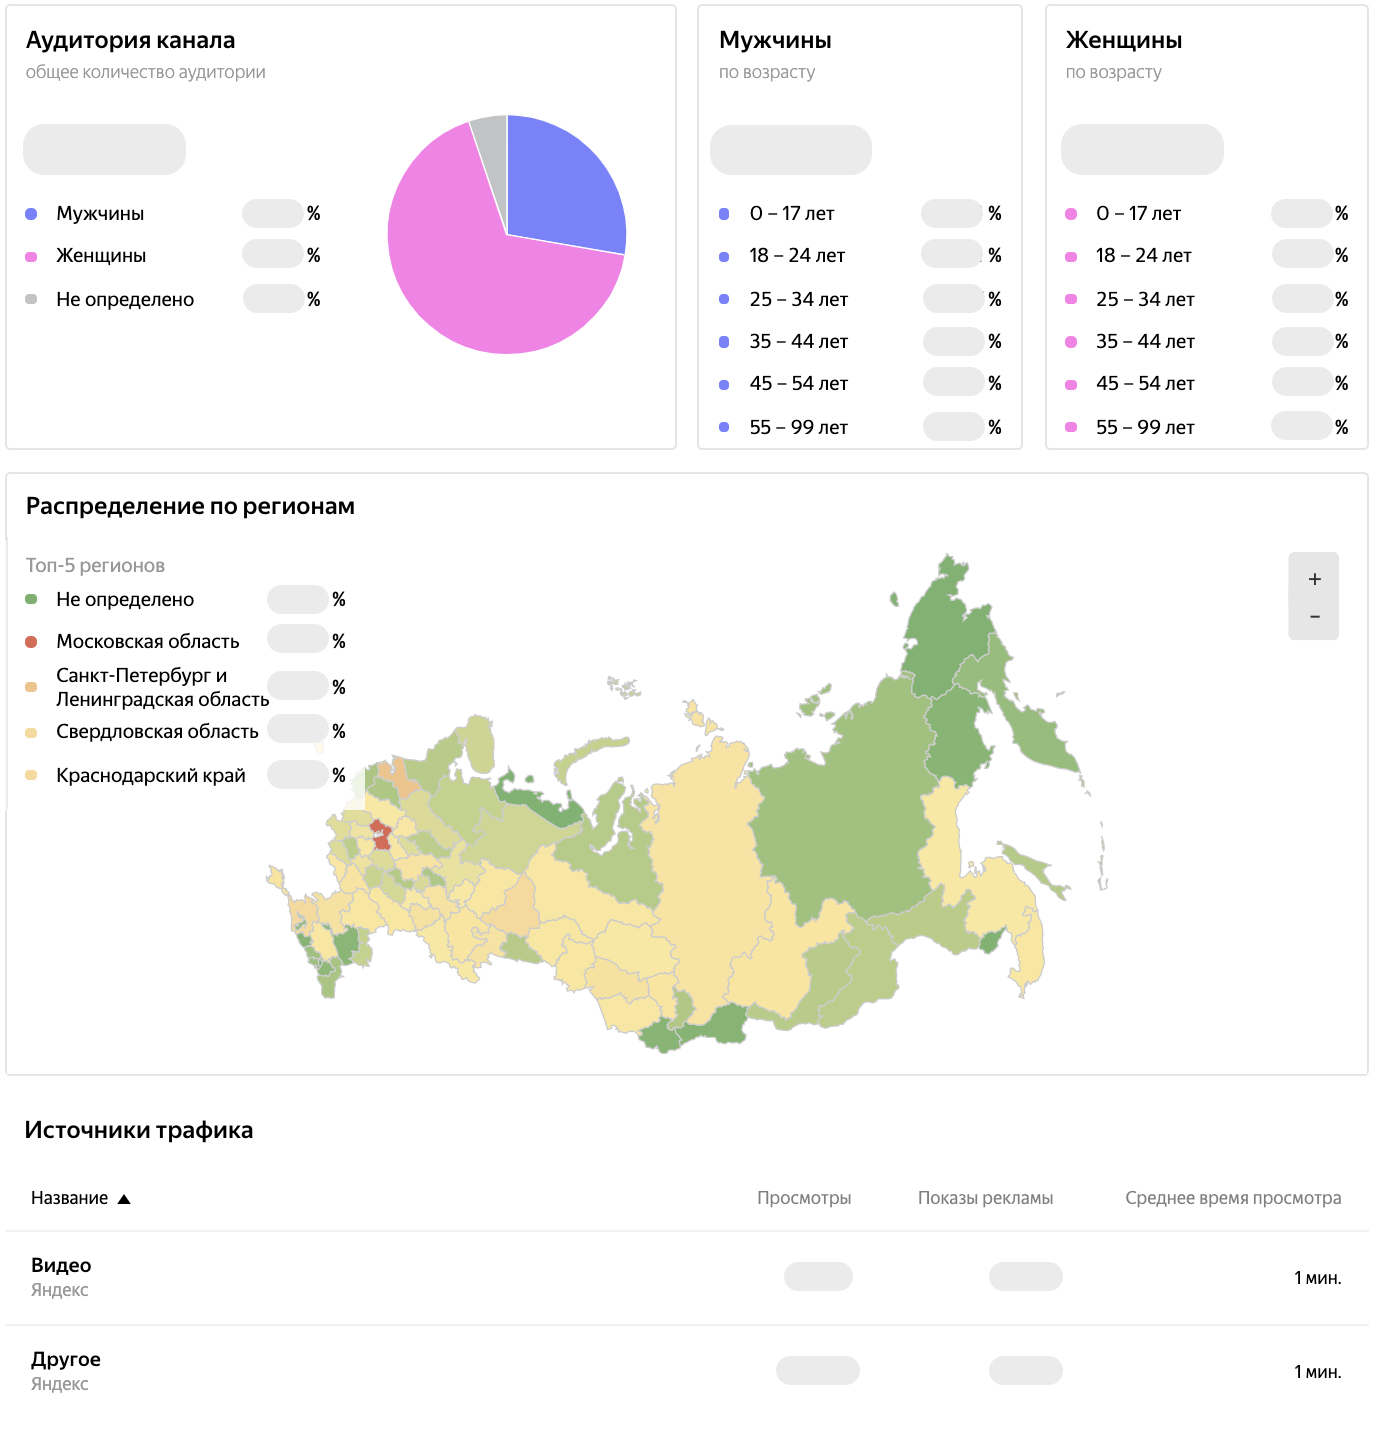 статистика бесплатного видеохостинга «Яндекс»